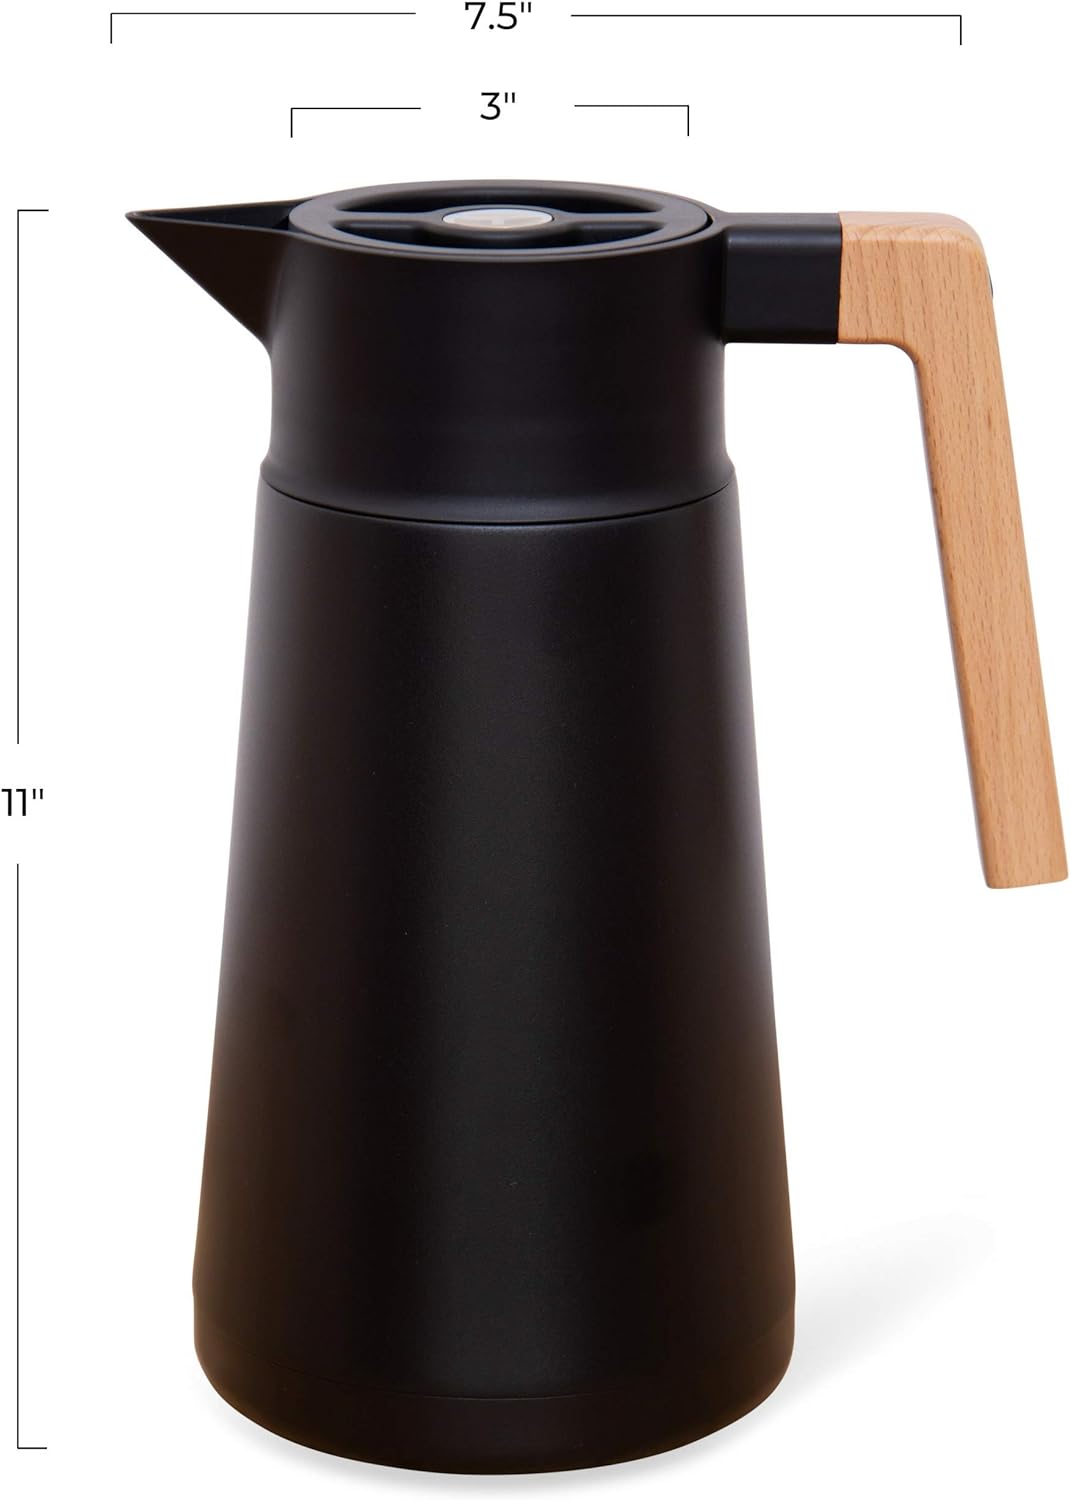 WhiteRhino 68oz Thermal Coffee Carafe,Stainless Steel Coffee